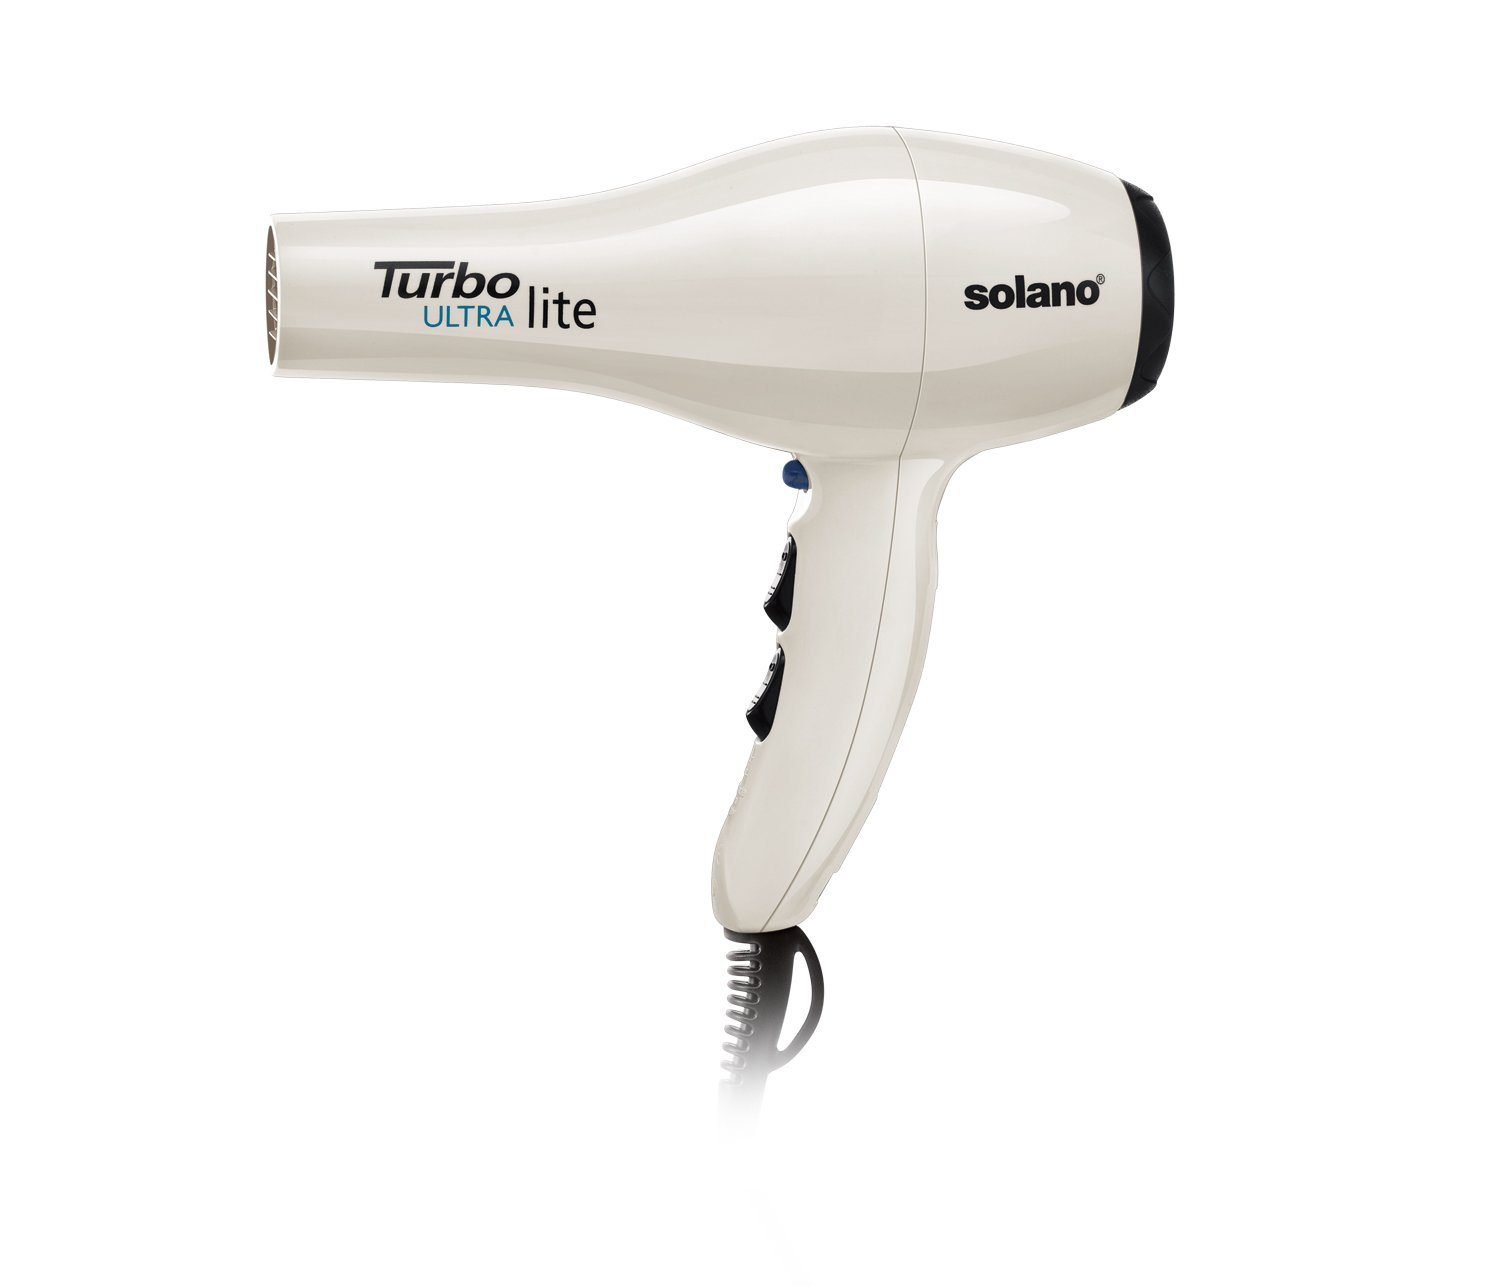 Solano Turbo Ultralite Professional Hair Dryer